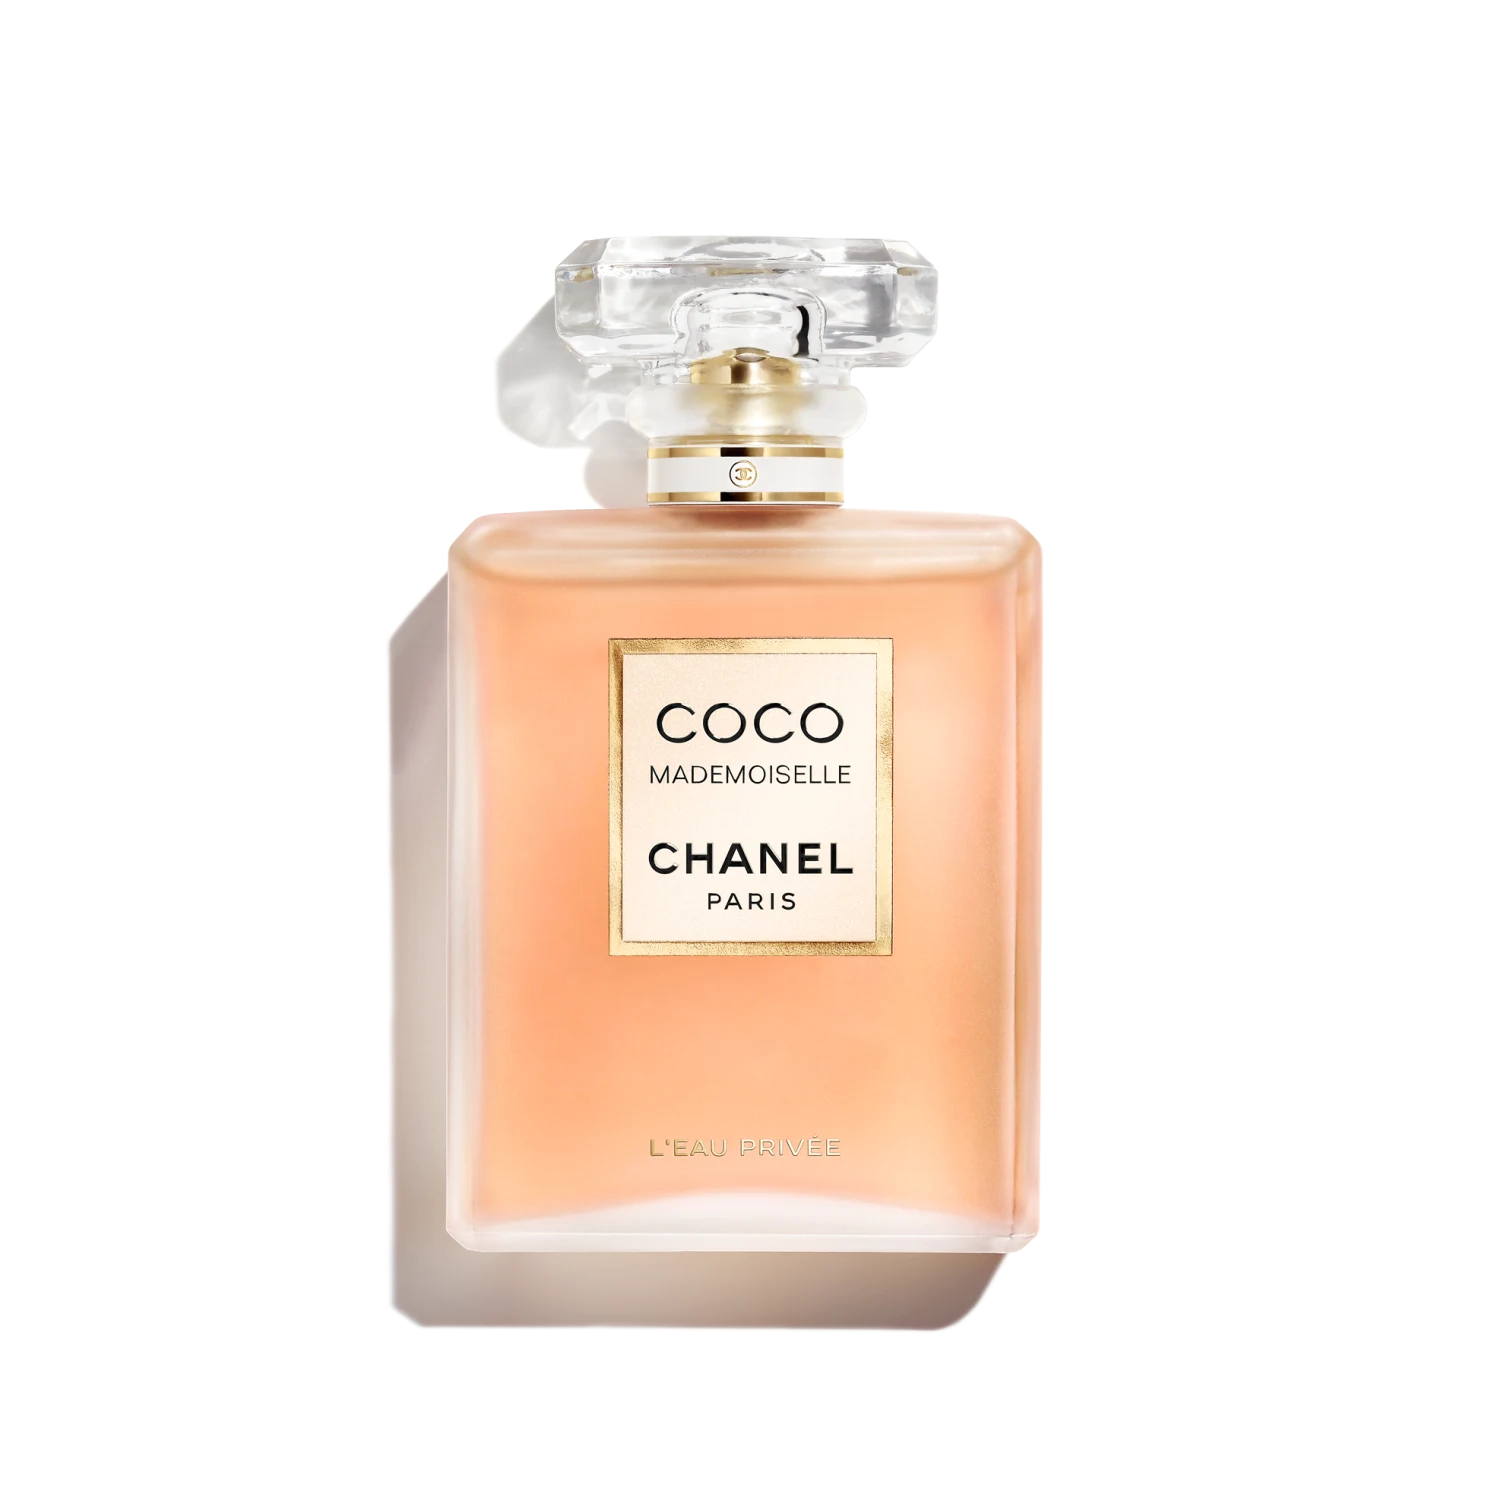 Вода парфюмерная Chanel Coco Mademoiselle L'Eau Privee женская, 100 мл coco chanel an essence of mystery